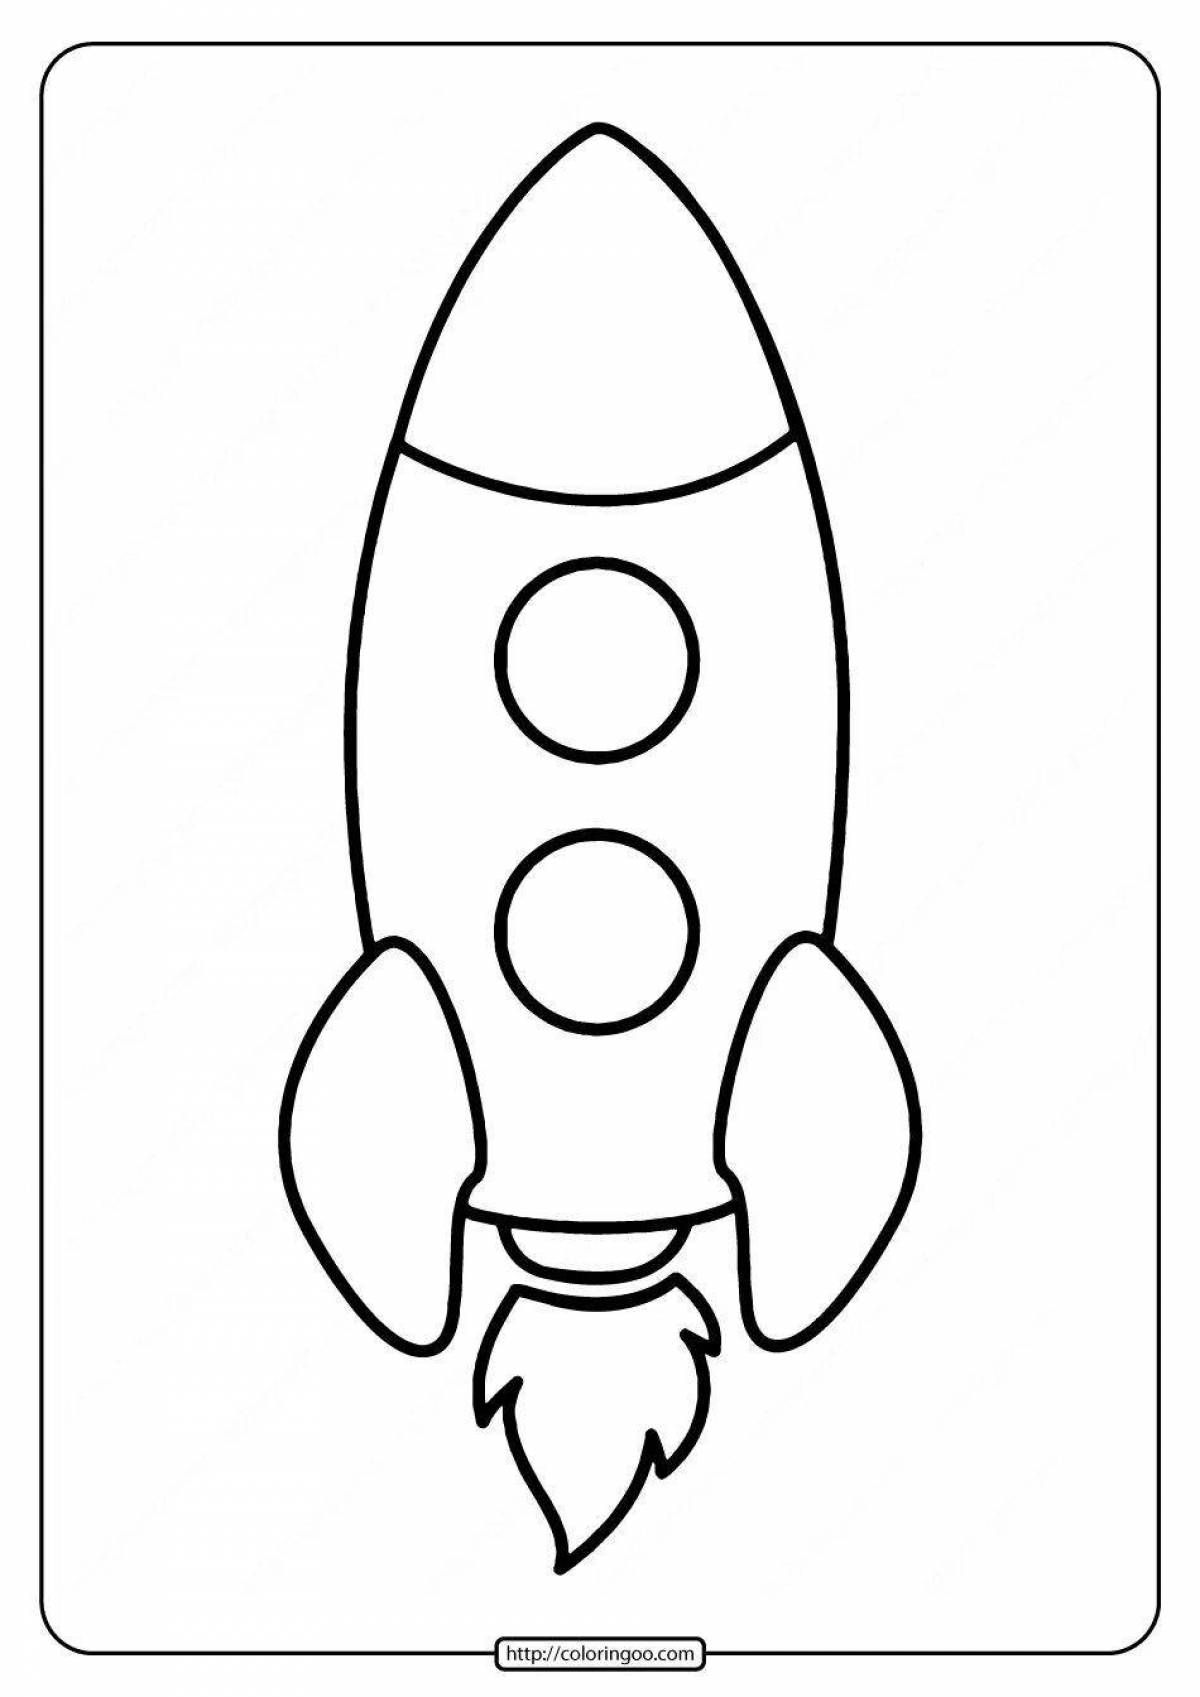 Раскраска lovely rocket для детей 3-4 лет